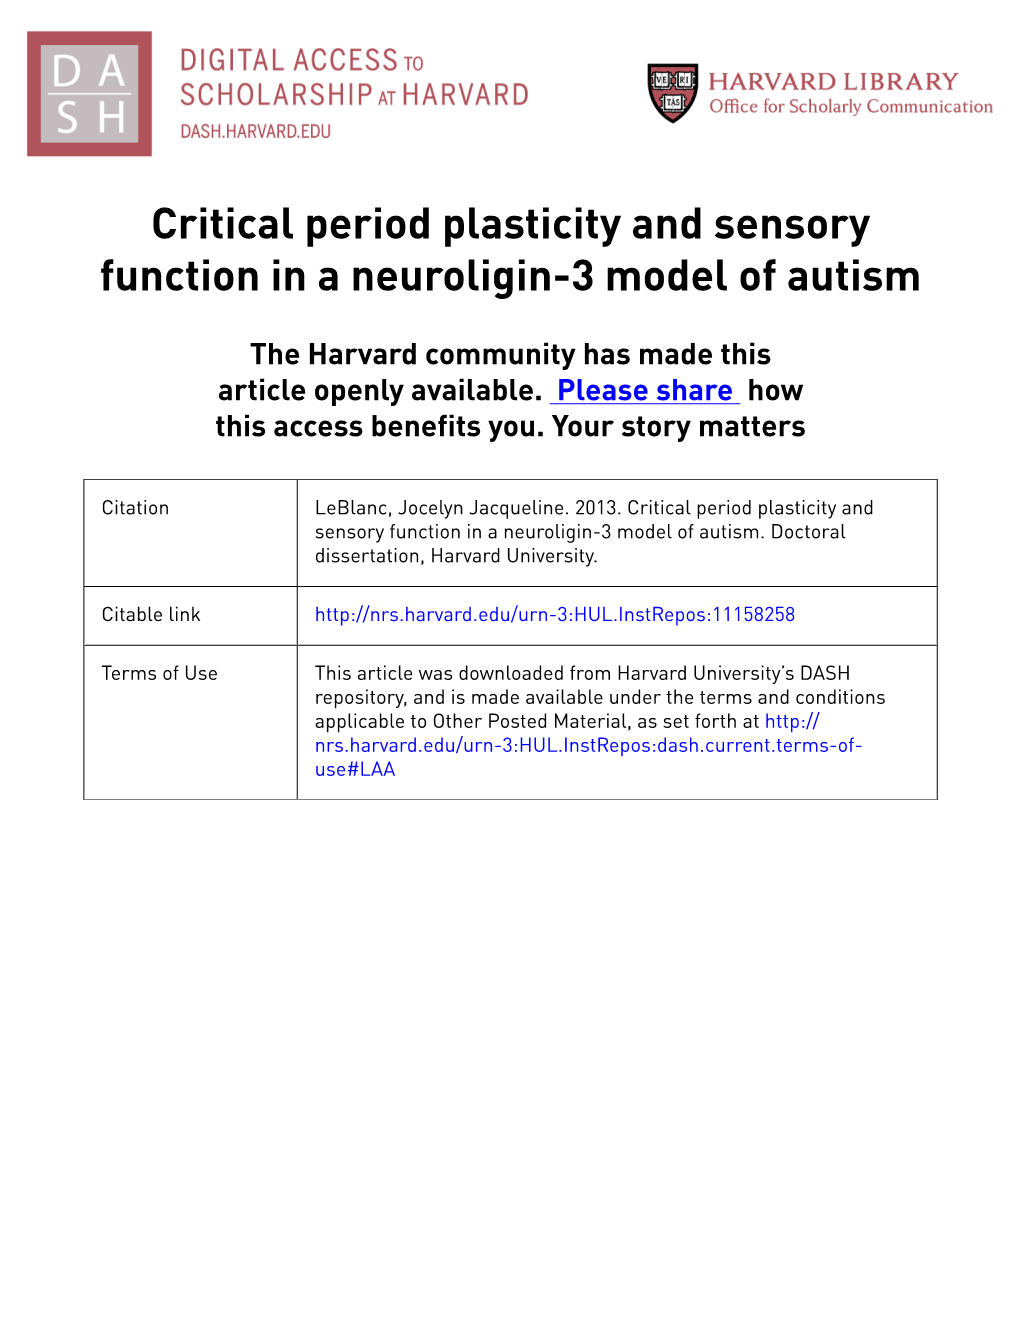 Critical Period Plasticity and Sensory Function in a Neuroligin-3 Model of Autism